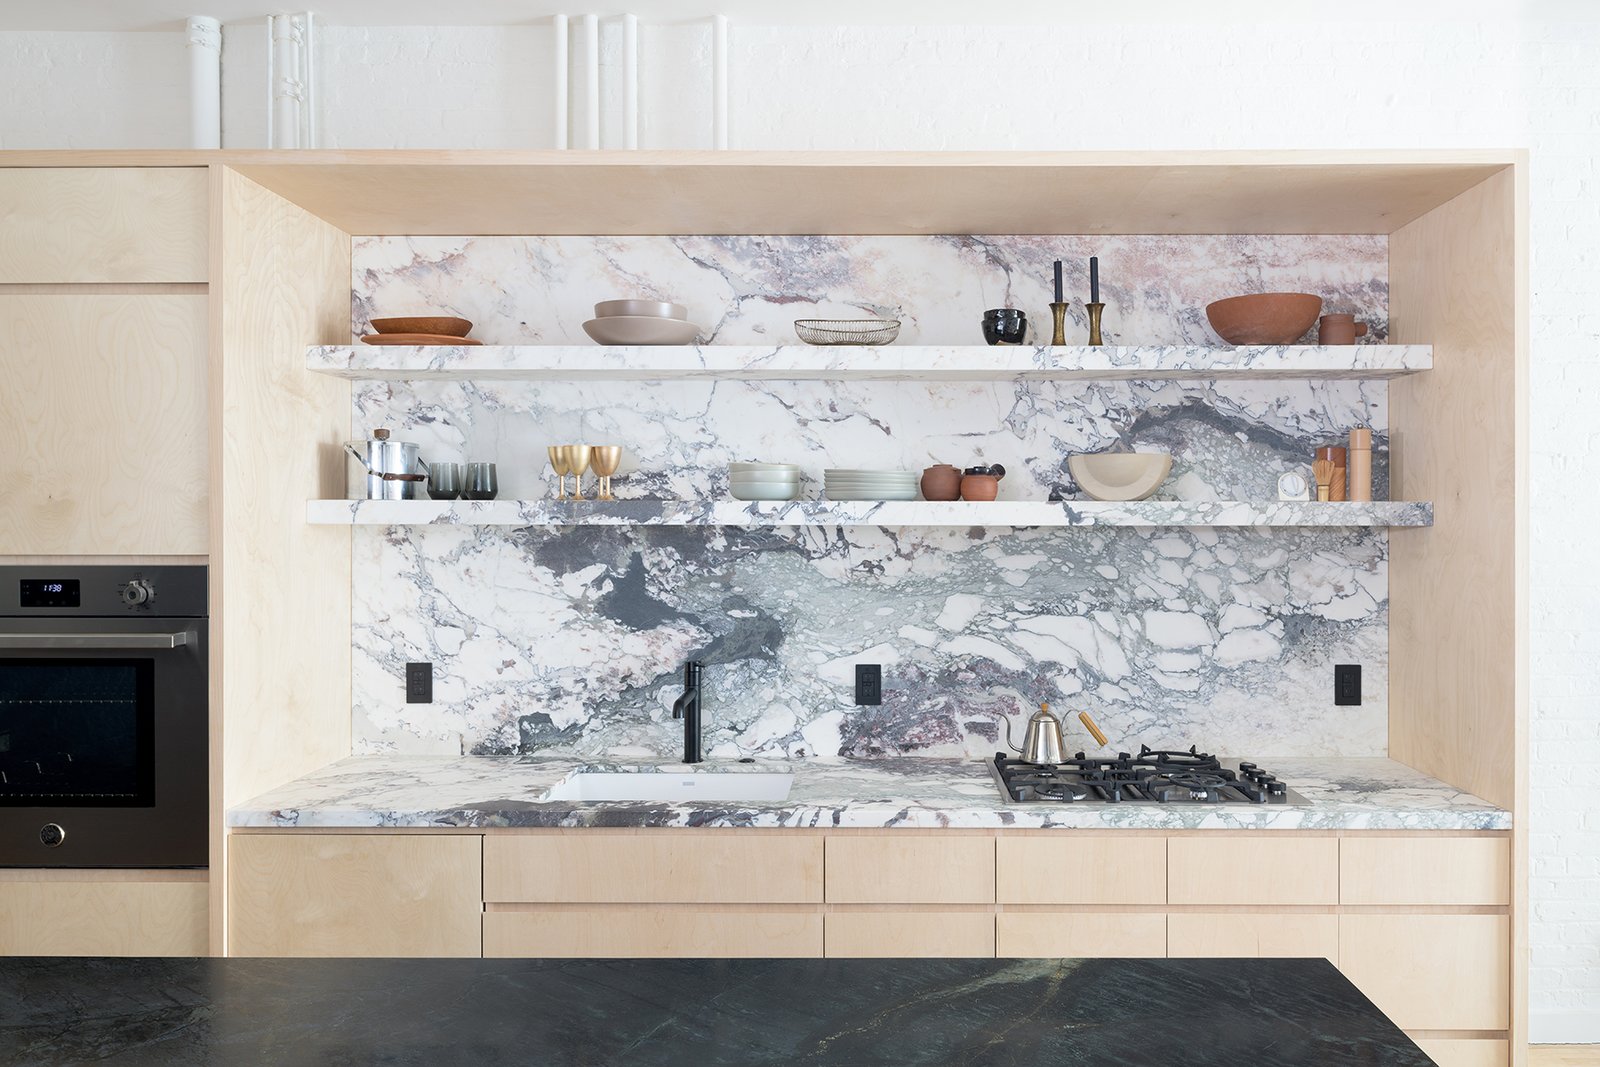 Breccia Marble Tiles On Kitchen Backsplash